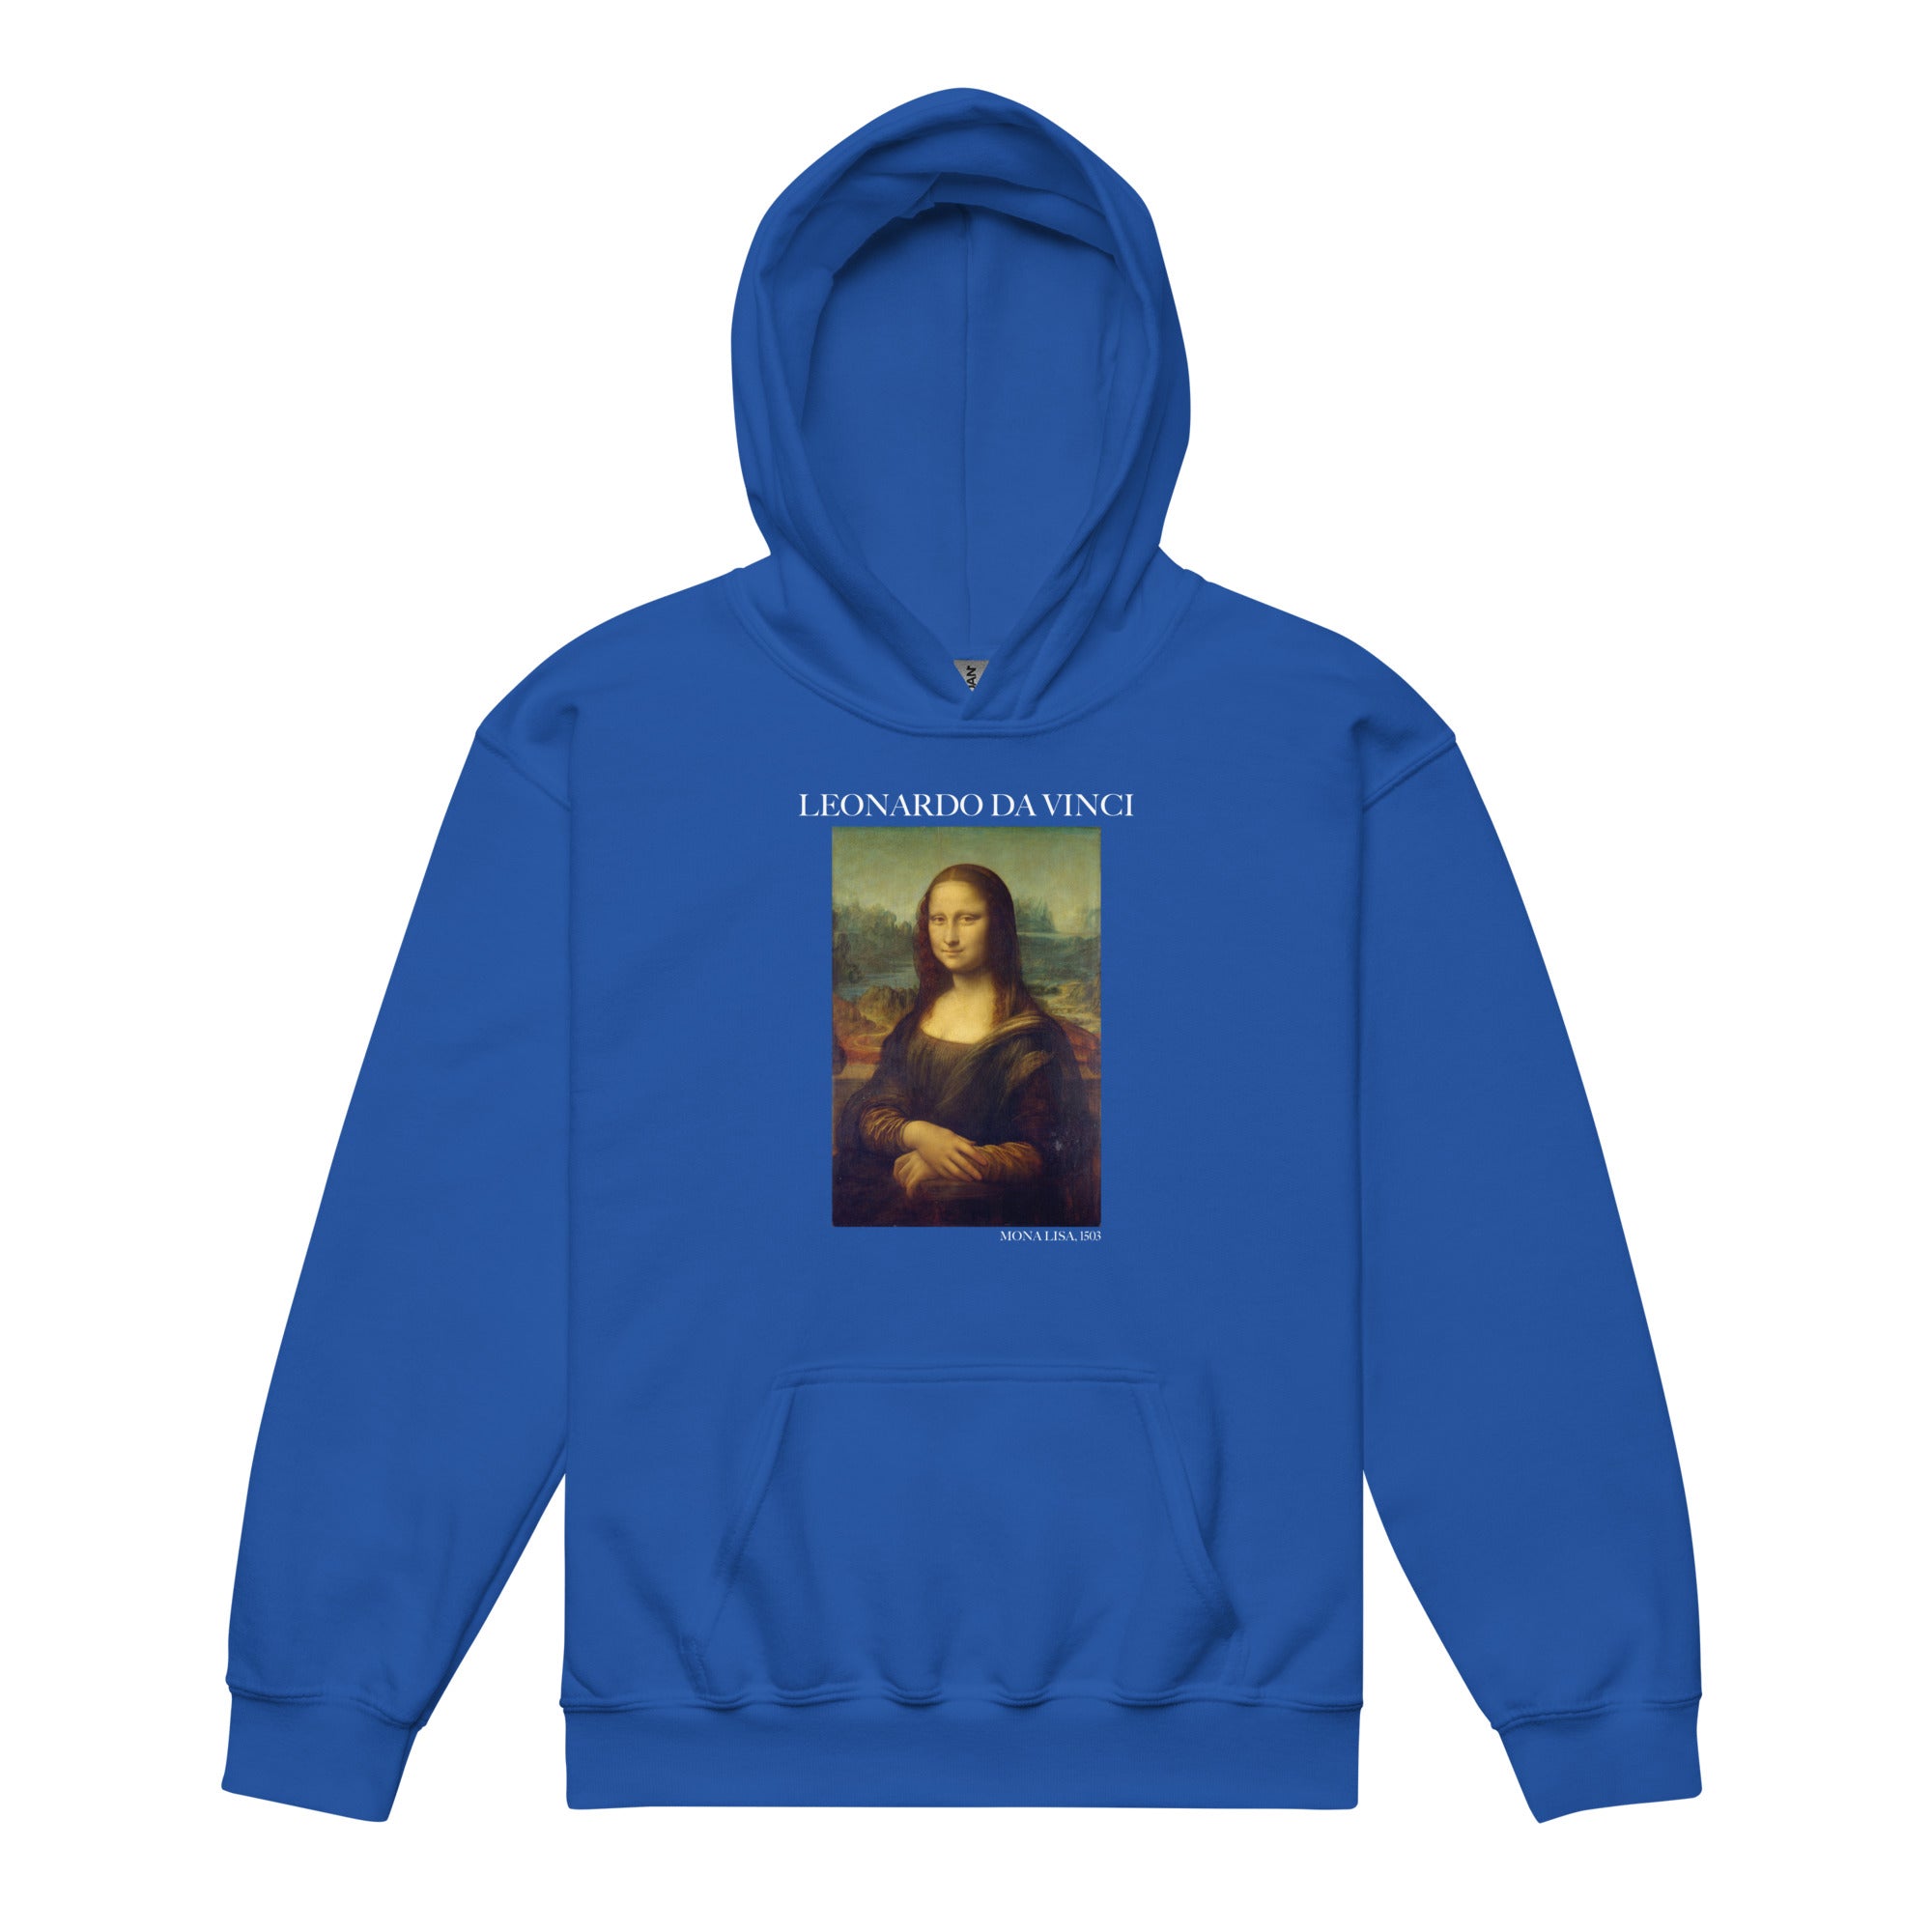 Leonardo da Vinci 'Mona Lisa' Famous Painting Hoodie | Premium Youth Art Hoodie